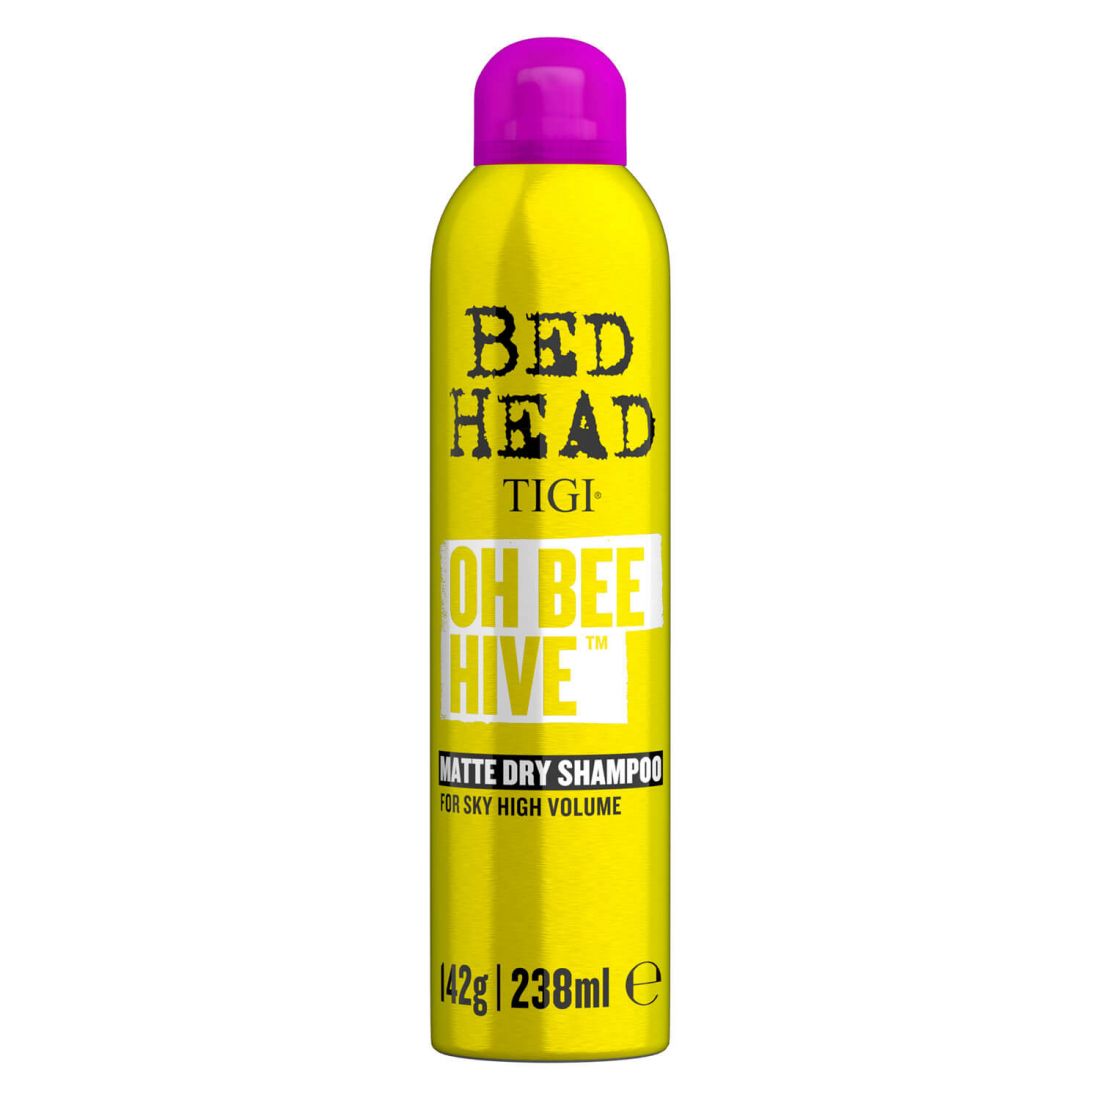 Tigi - Shampoing sec 'Bed Head Oh Bee Hive' - 238 ml